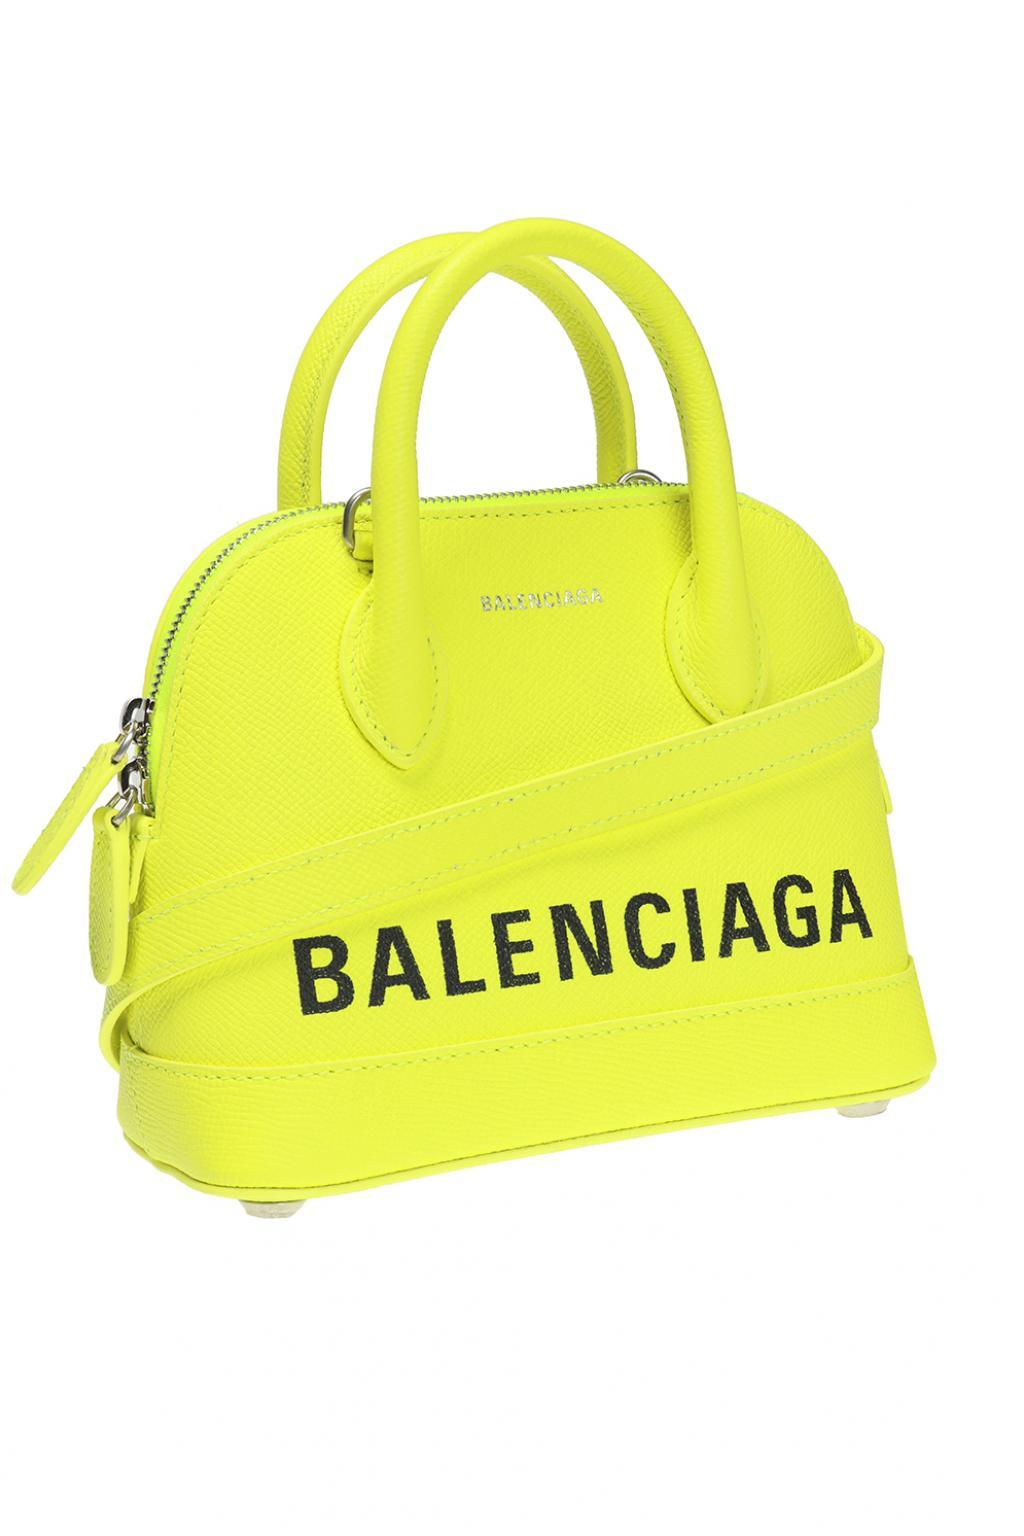 Balenciaga Logo-printed Shoulder Bag in Yellow | Lyst